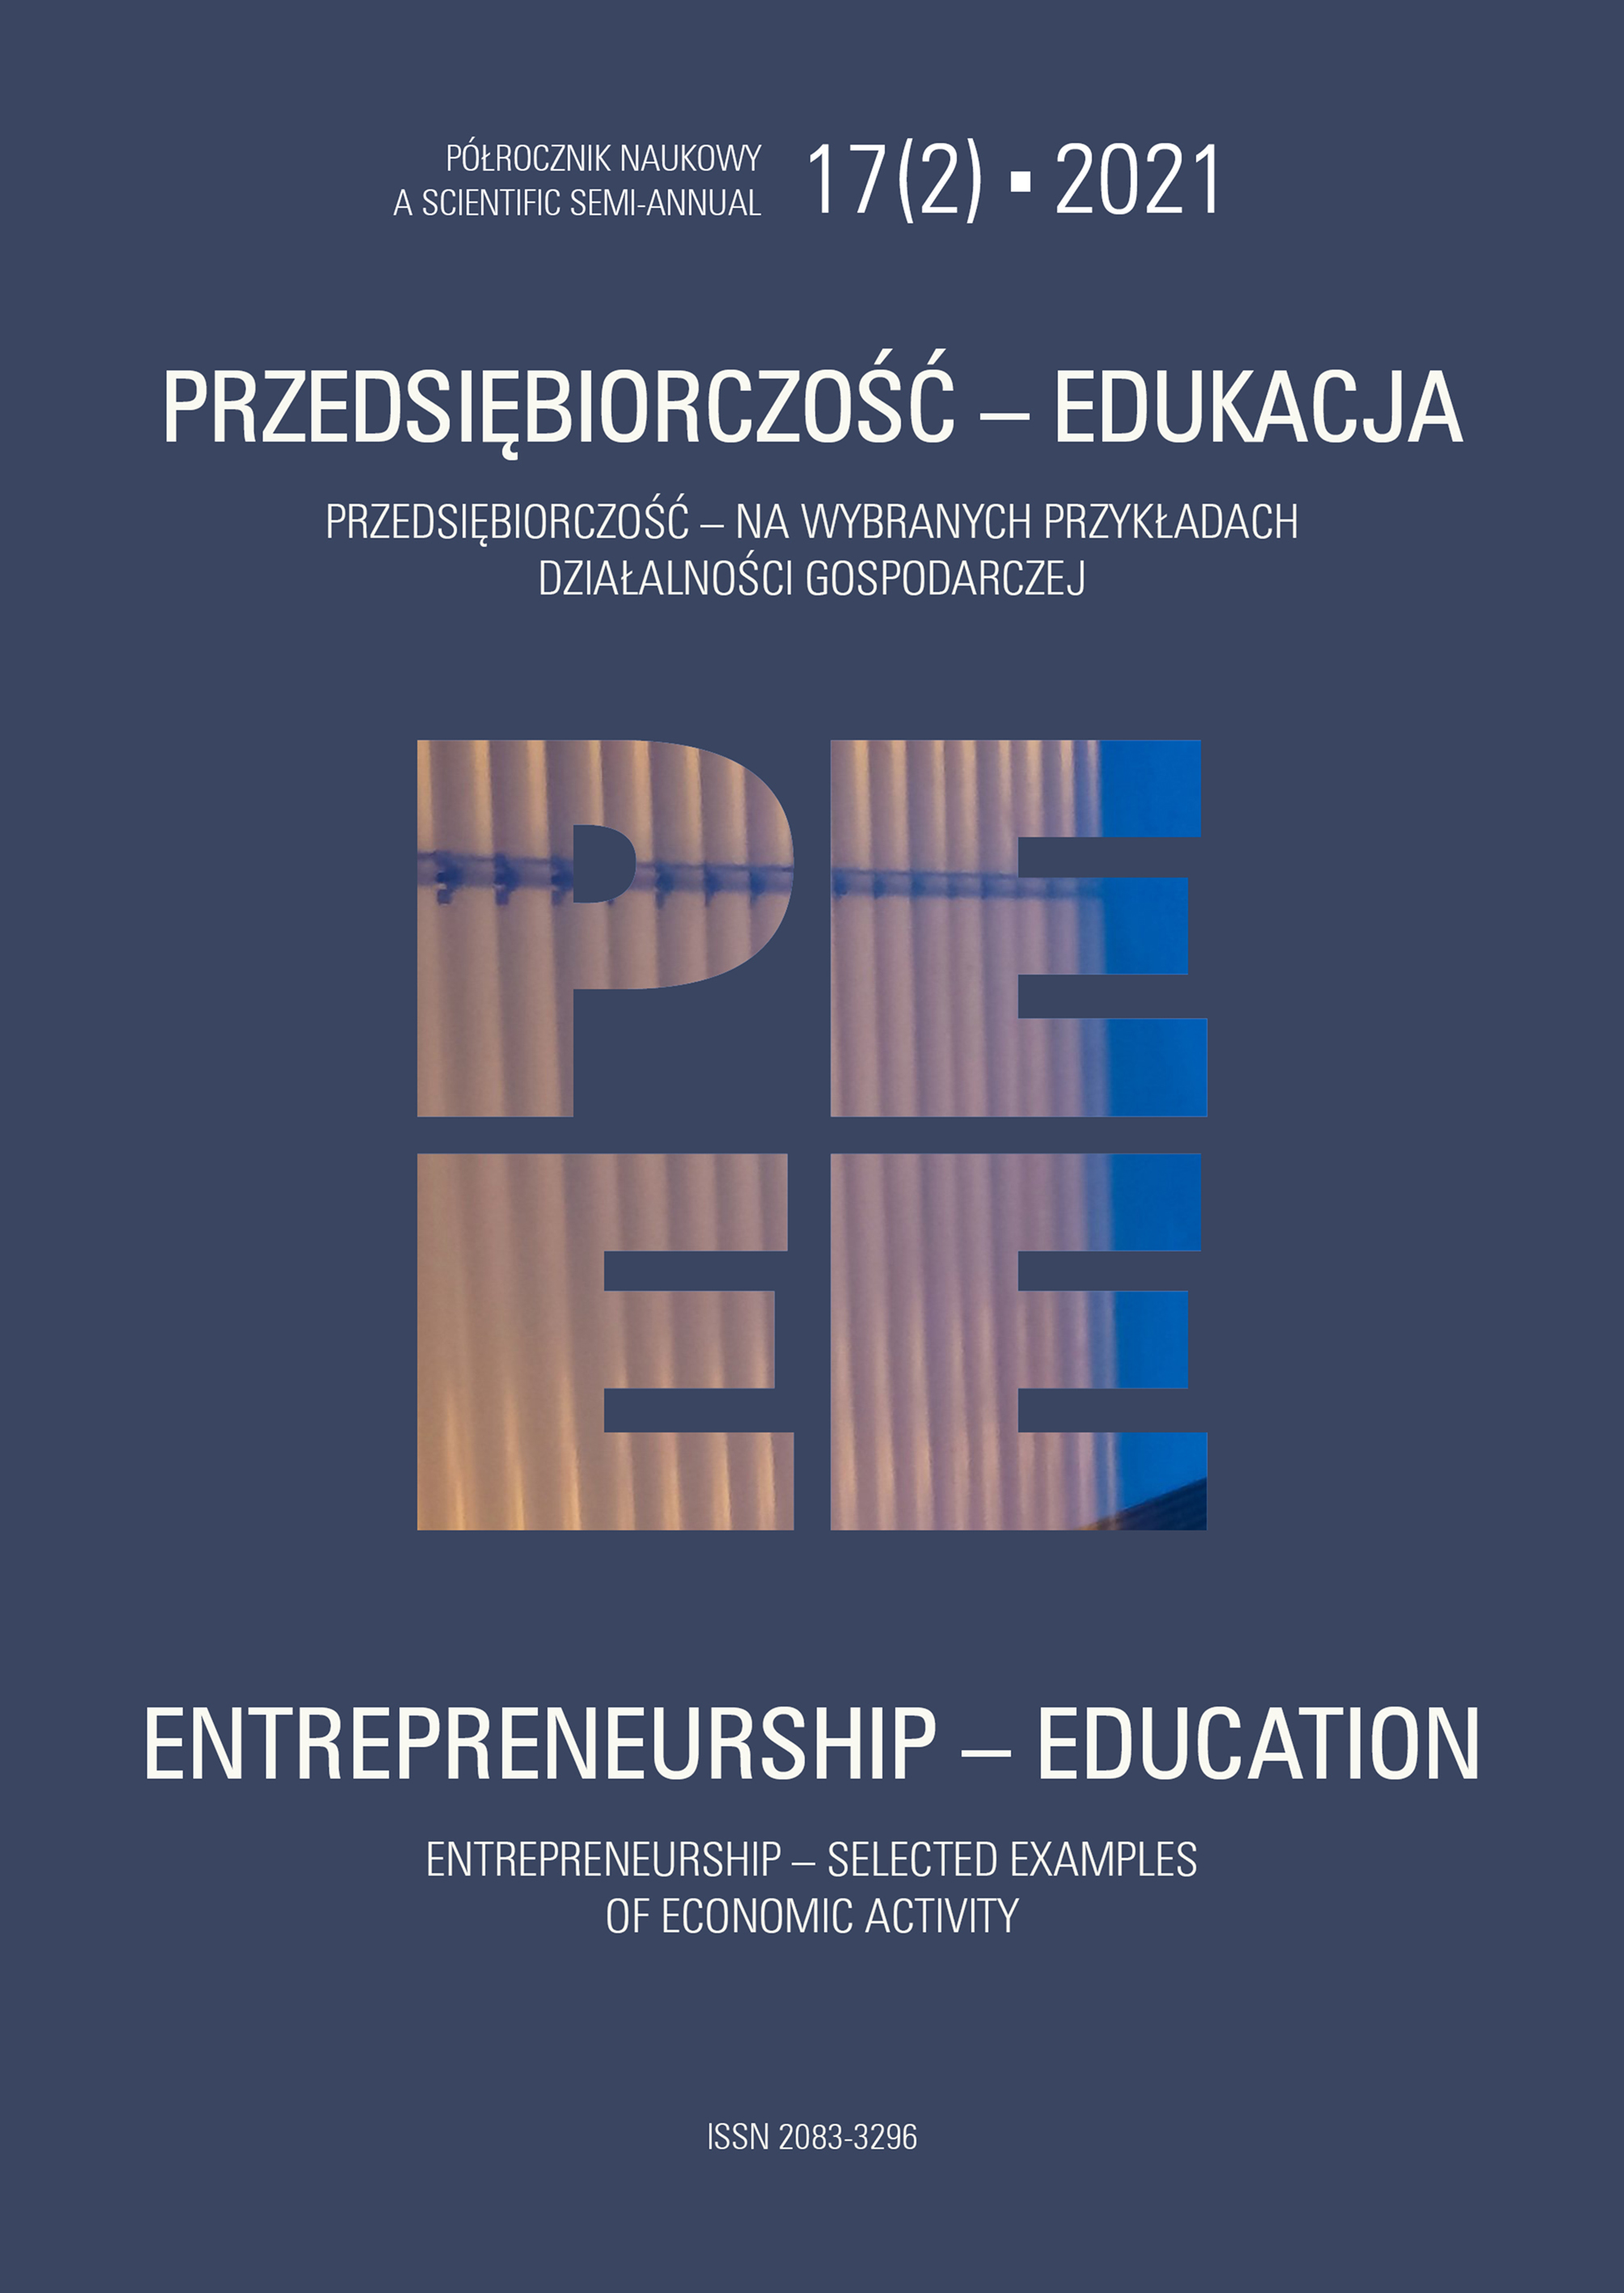 					View Vol. 17 No. 2 (2021): Entrepreneurship - selected examples of economic activity
				